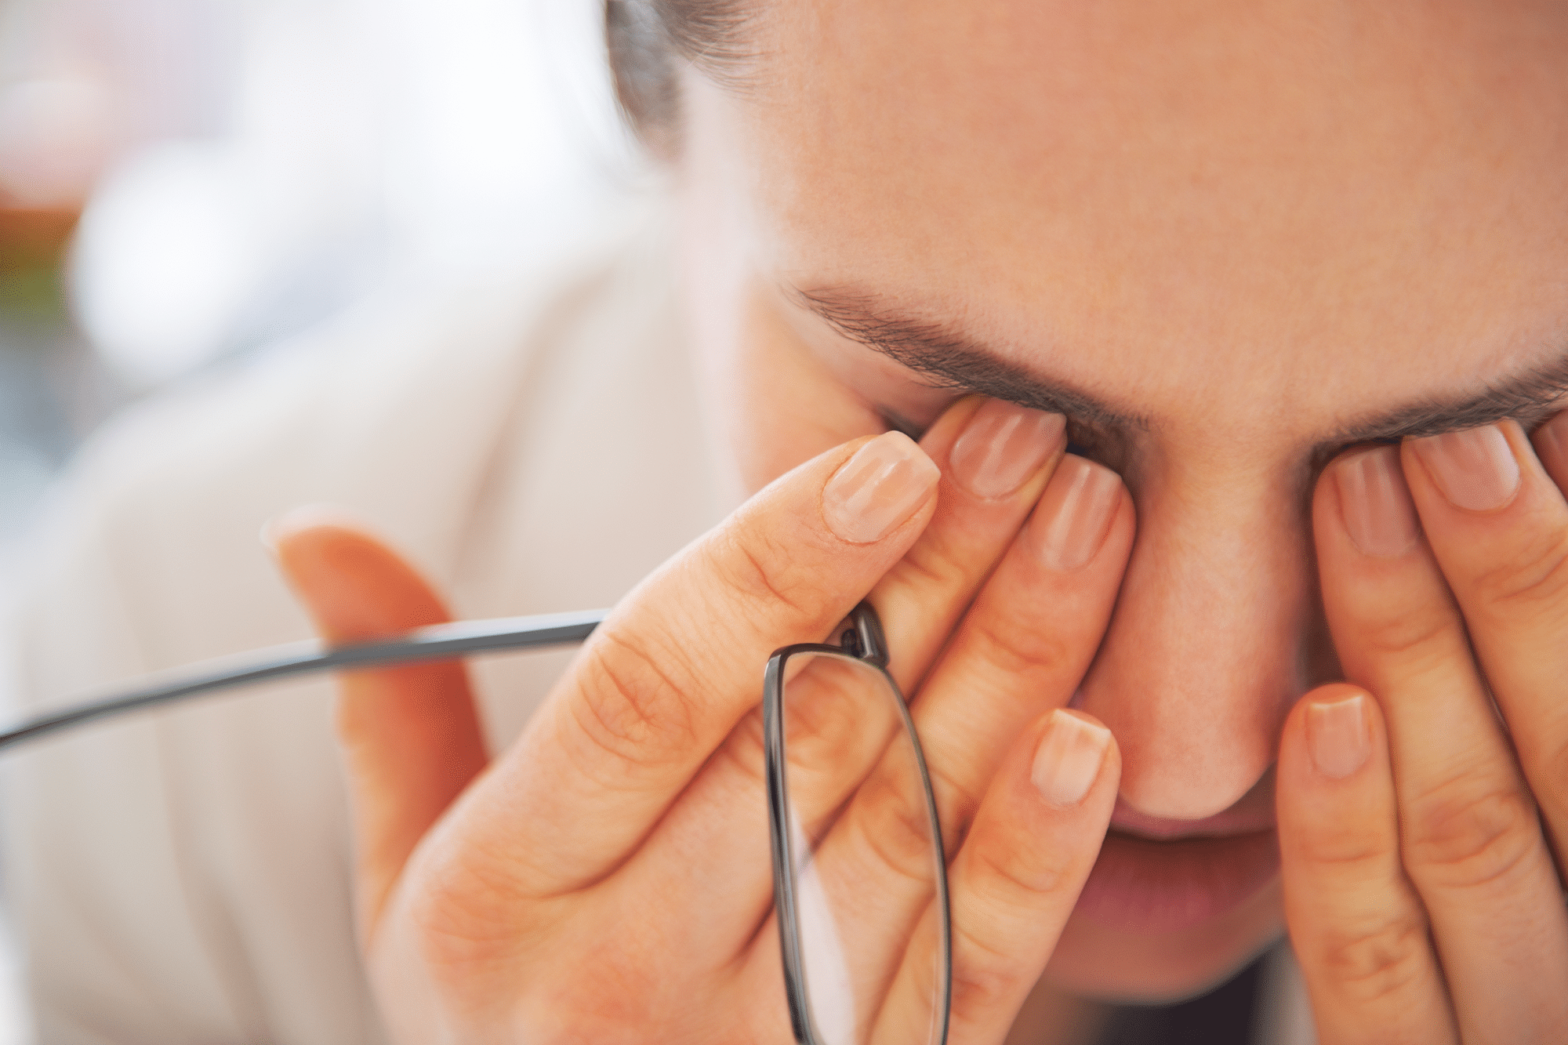 Dry Eye Syndrome Treatment Market